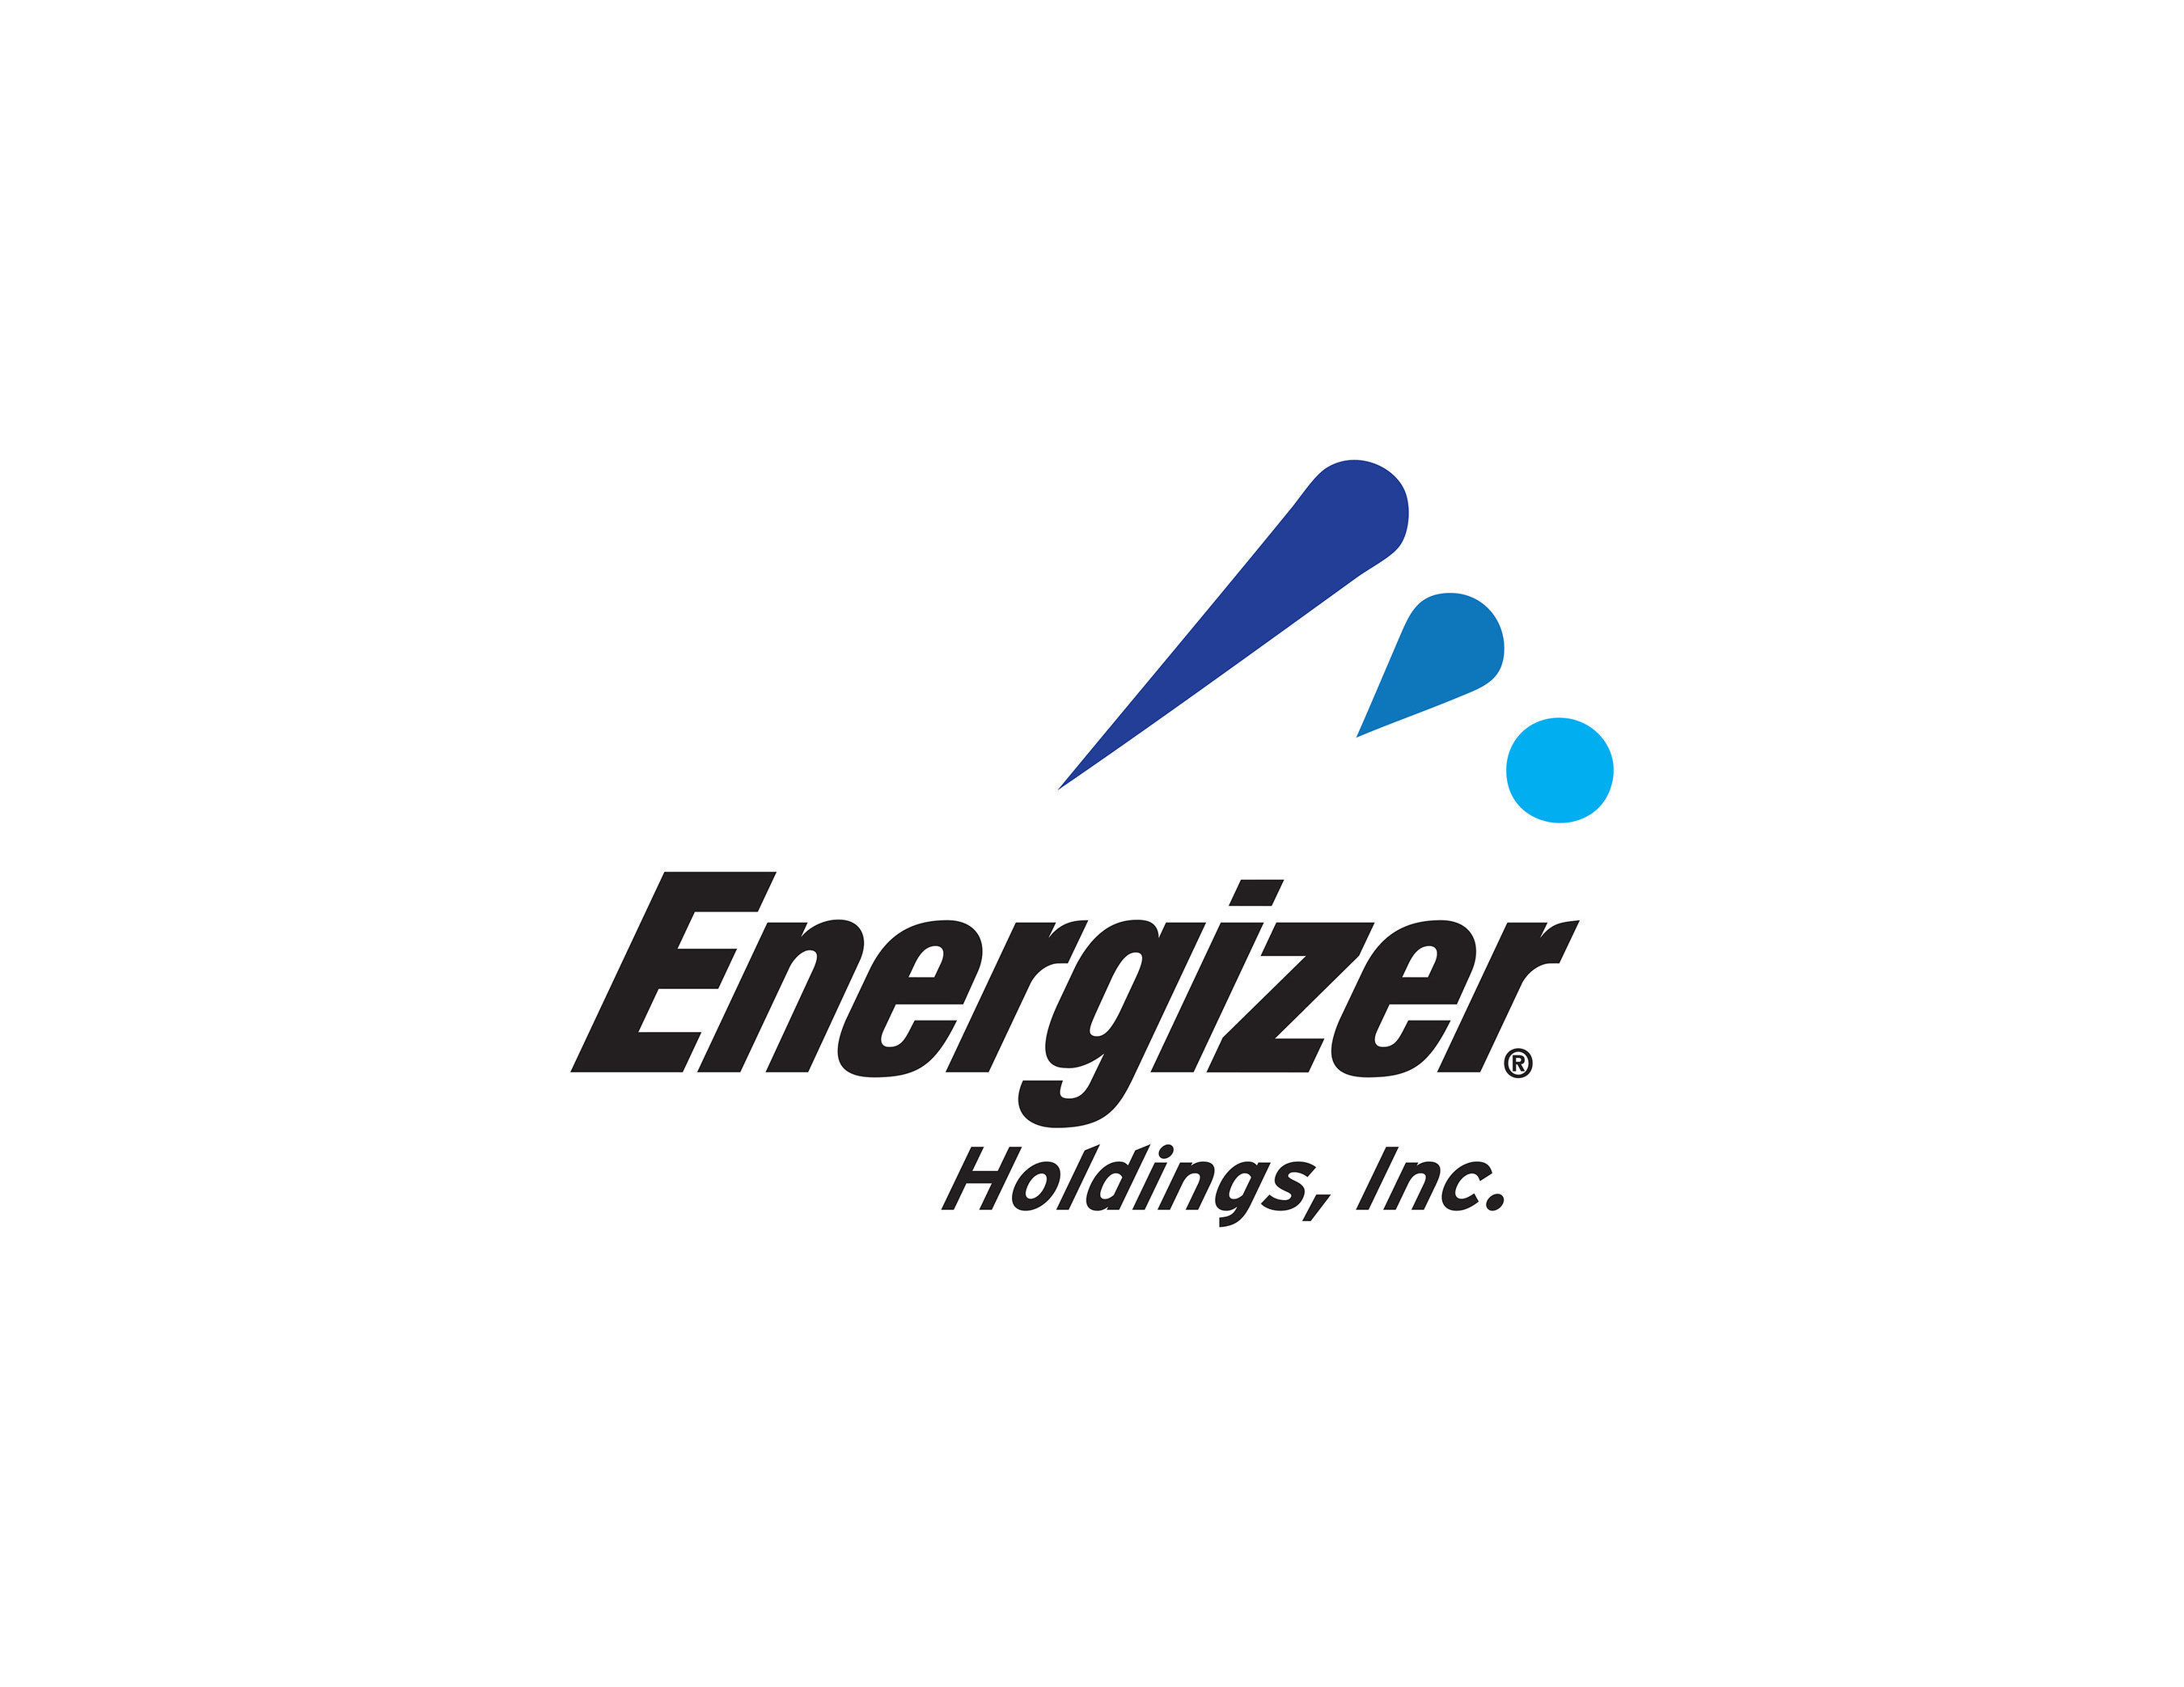 Energizer Holdings, Inc. (PRNewsfoto/Energizer Holdings, Inc.)